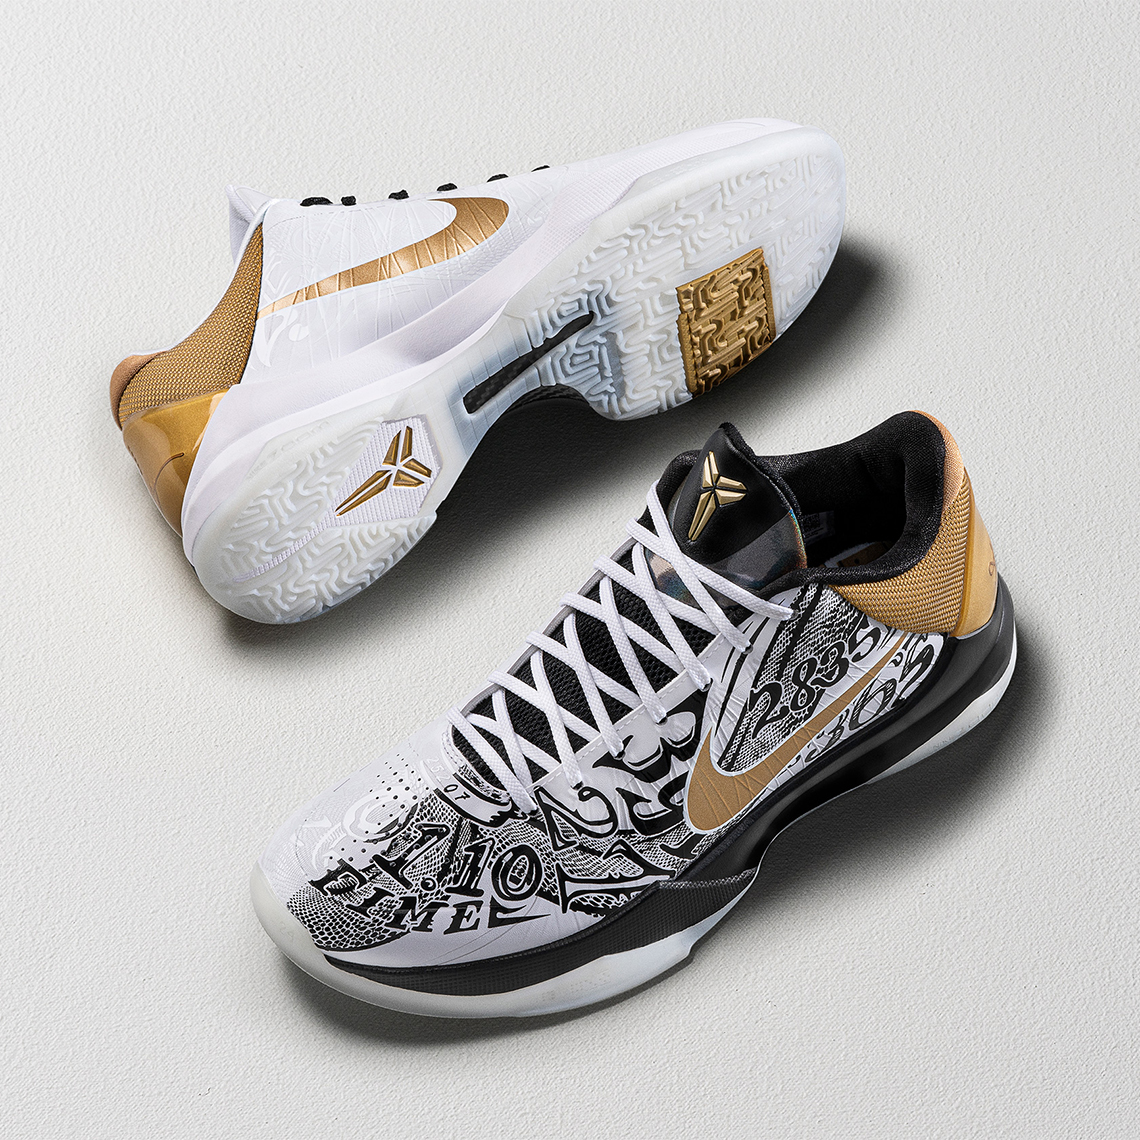 Where To Buy The Nike Kobe 5 Protro “Big Stage”